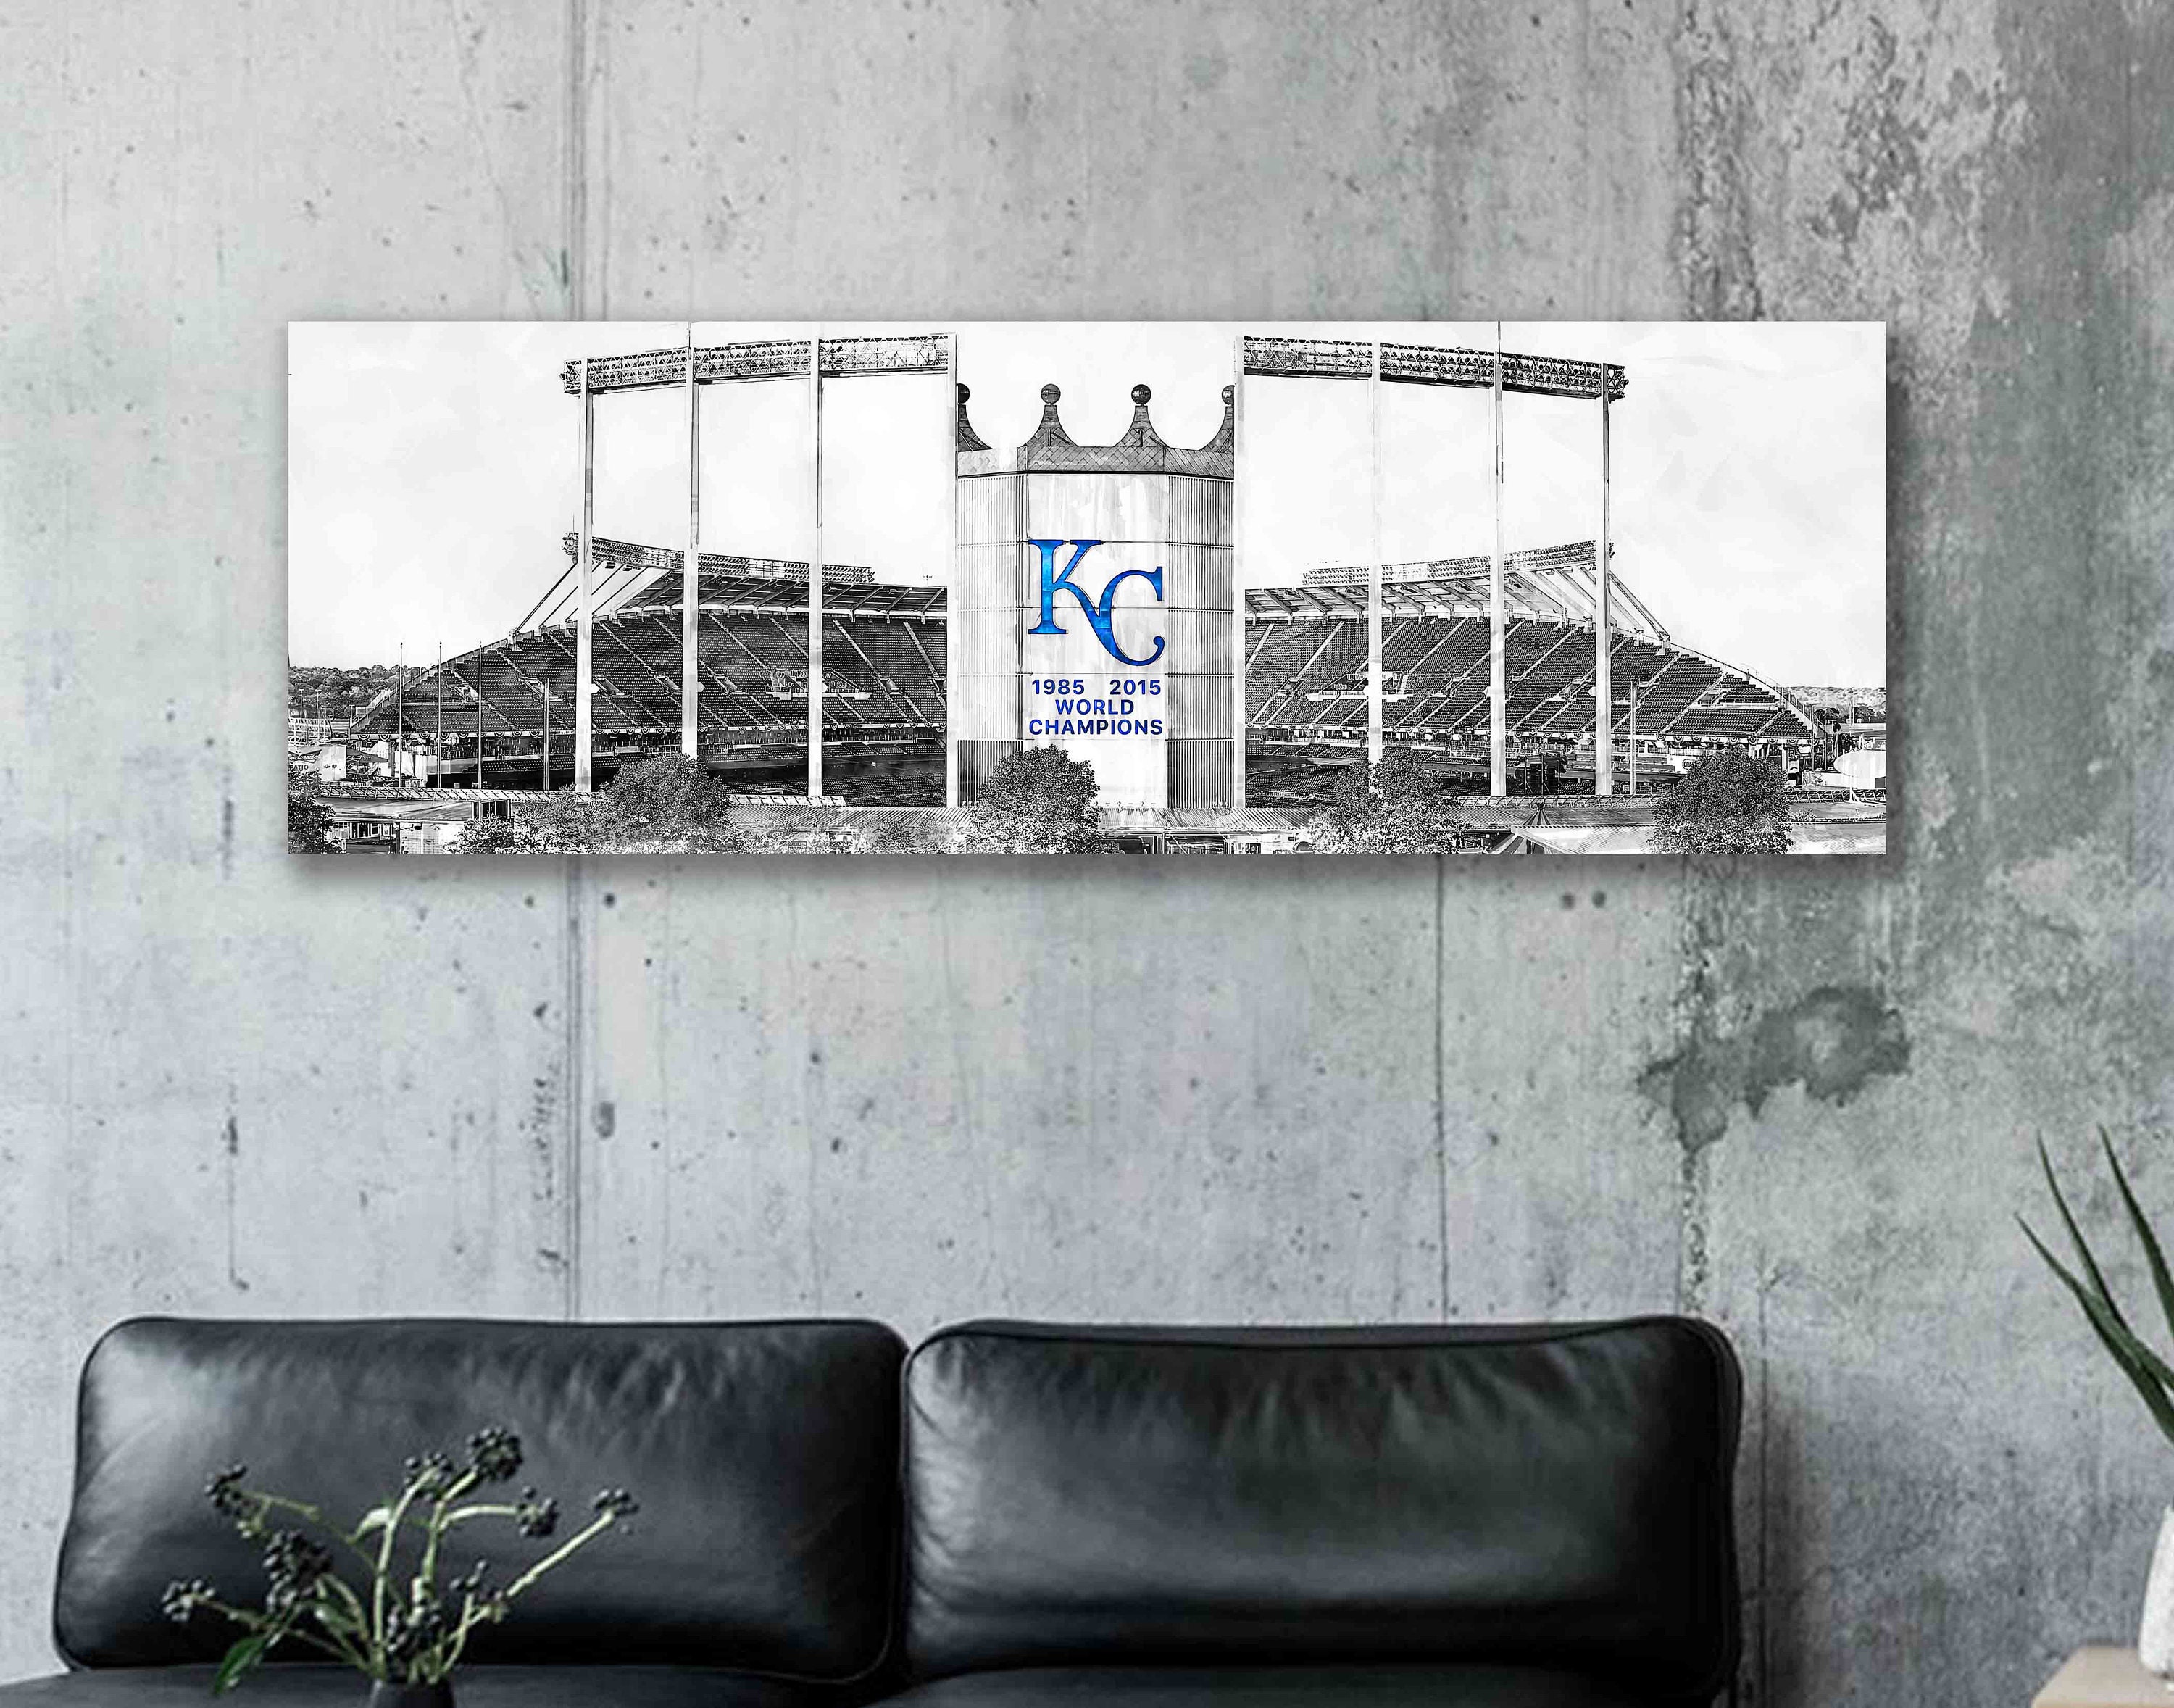 Kauffman Stadium Kansas City Royals Black & White Stadium -  Sweden